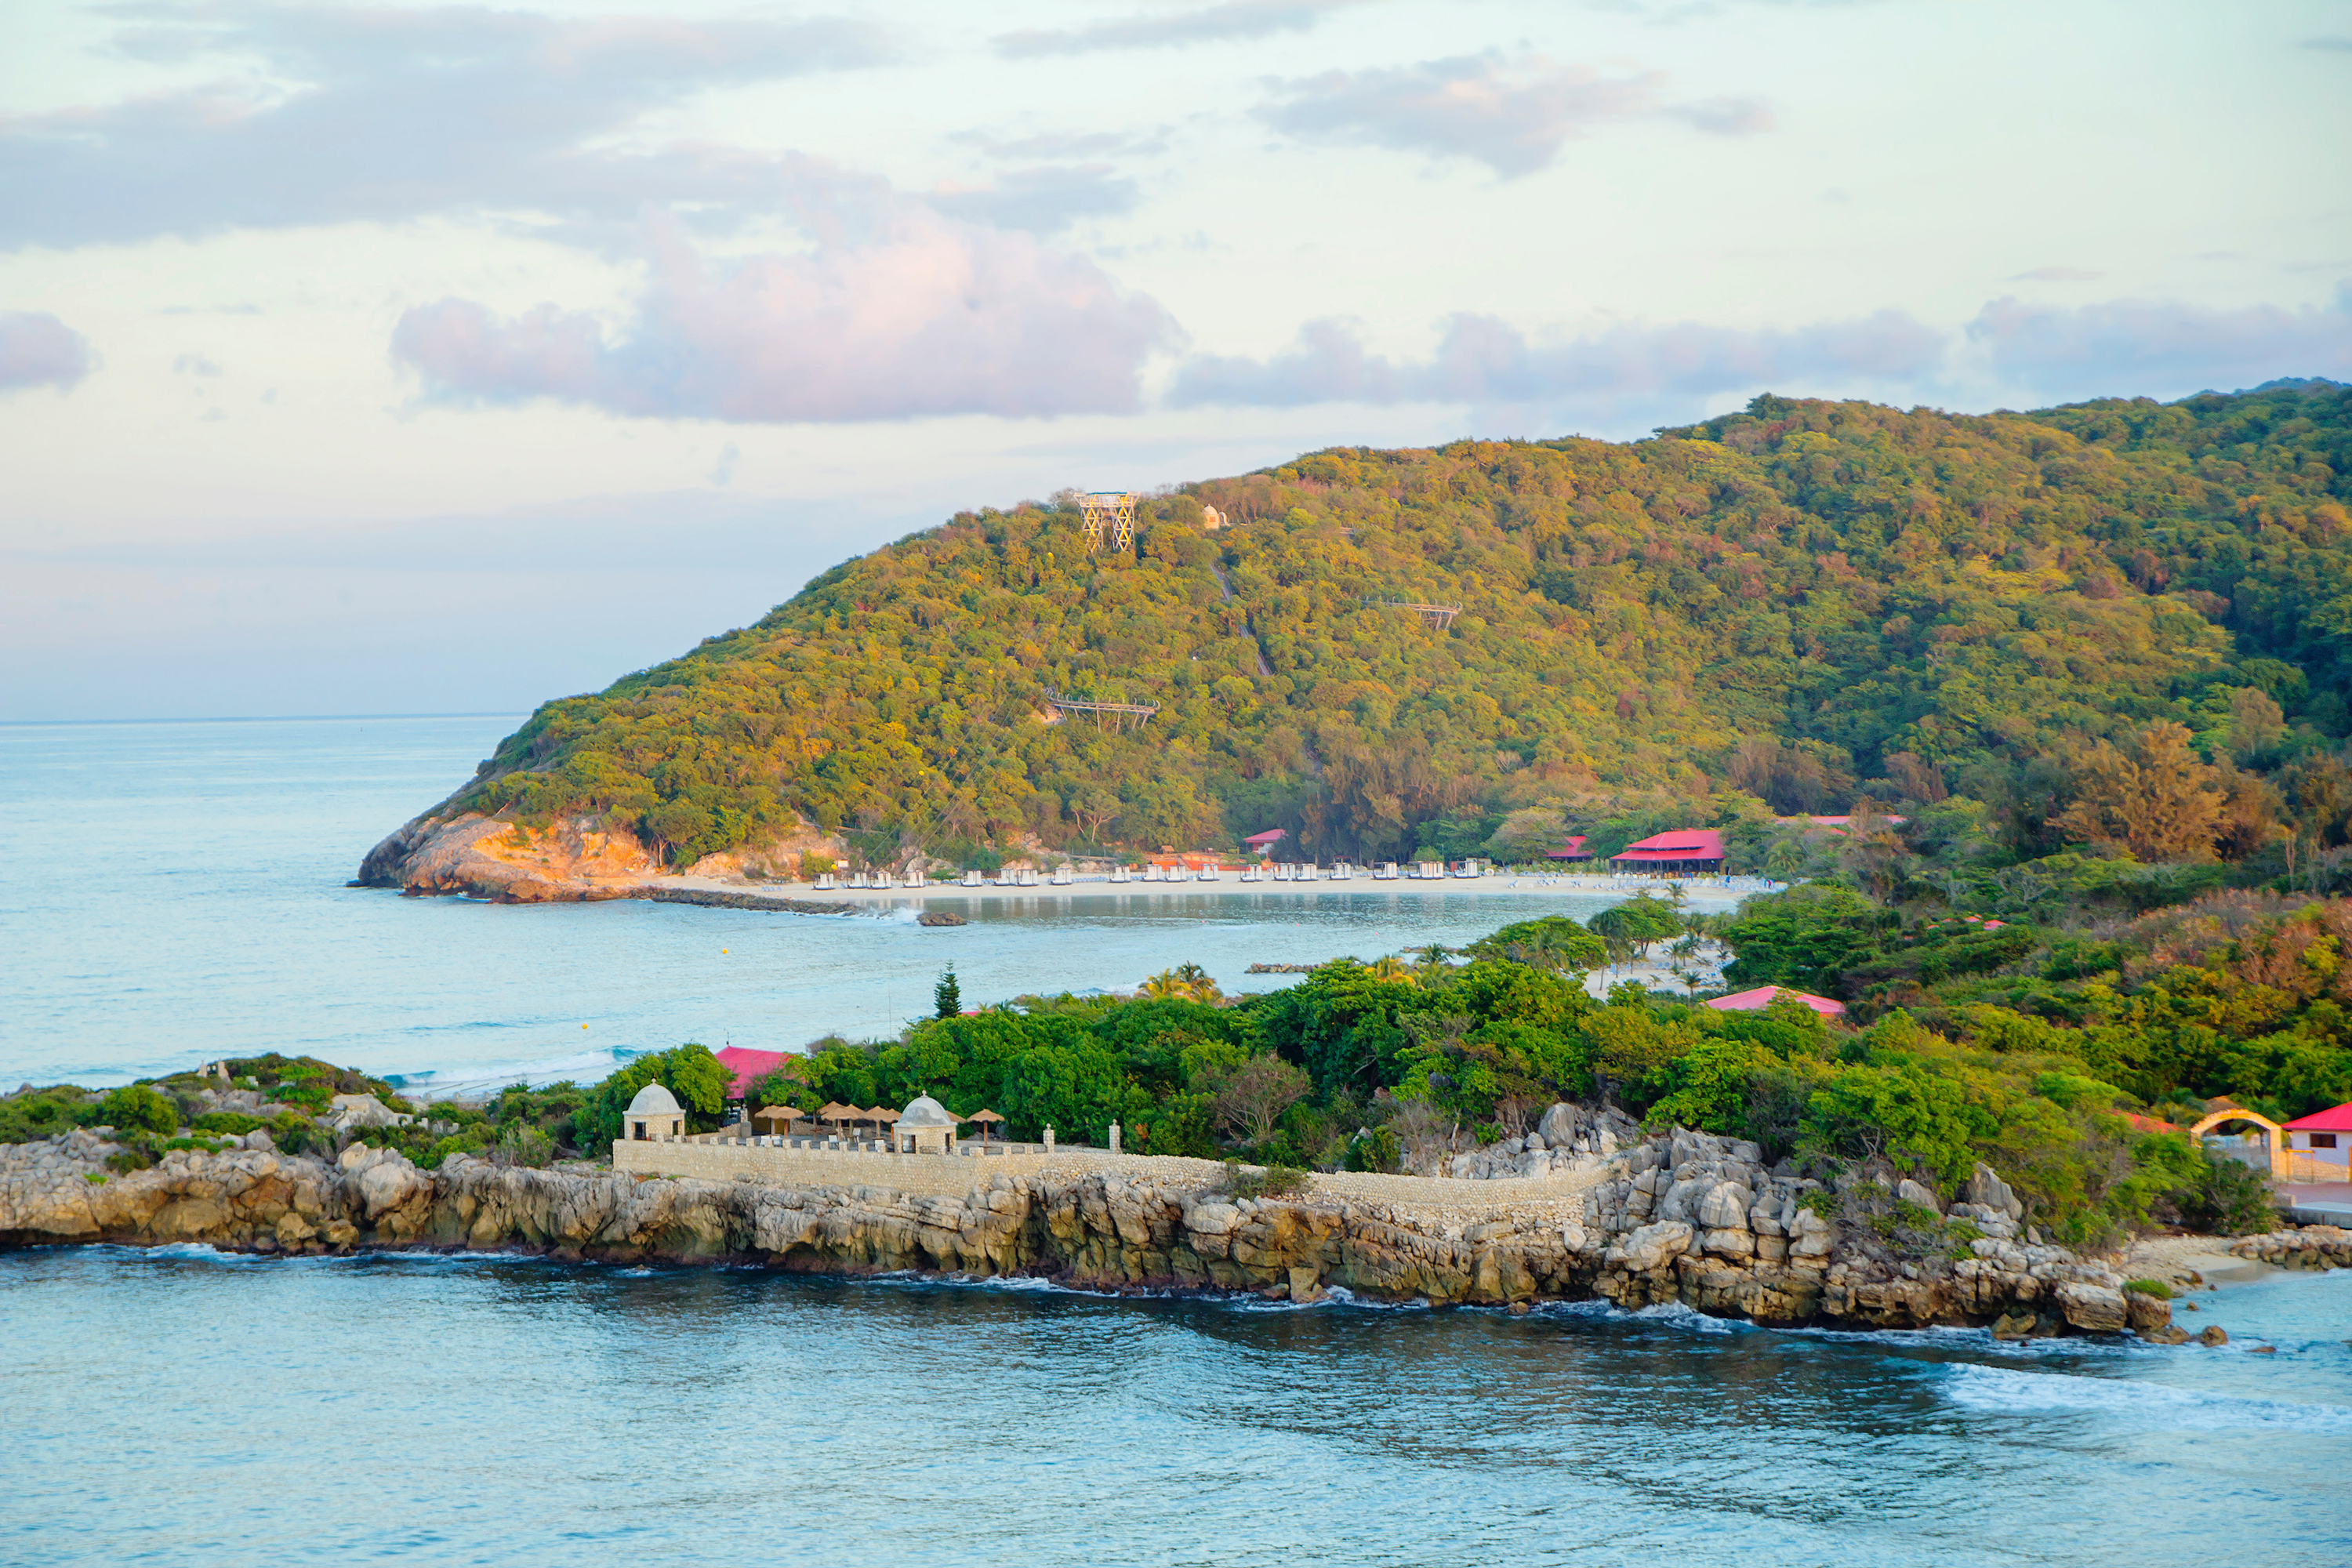 Haiti, and island in the Caribbean region